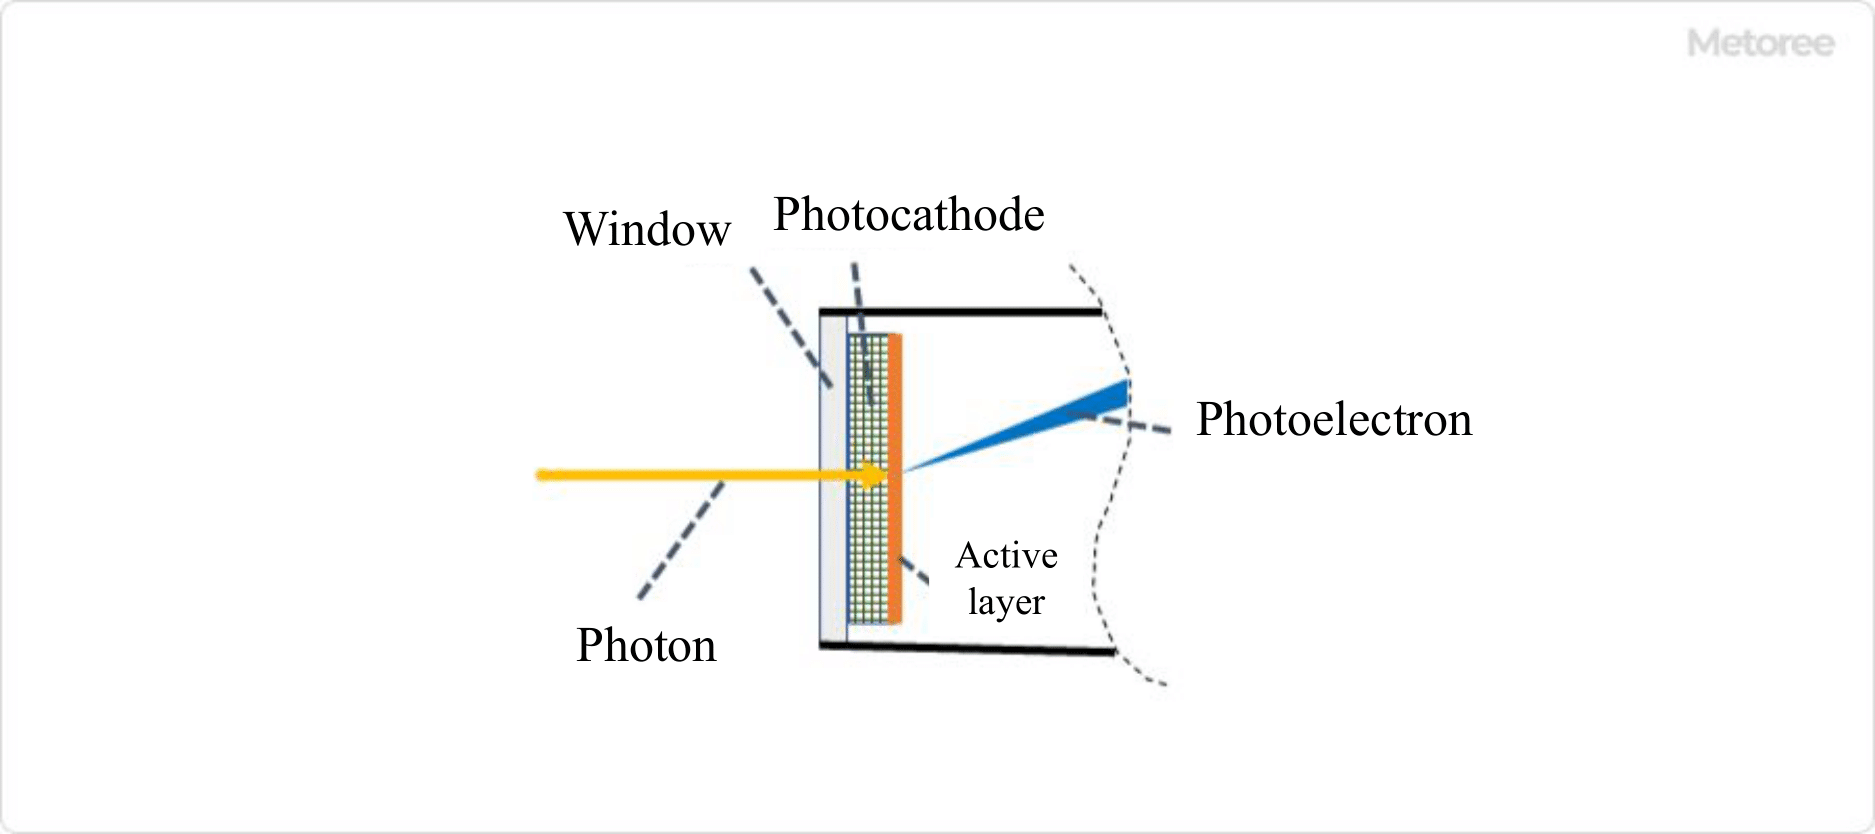 Figure 2. Photocathode and external photoelectric effect (Image)